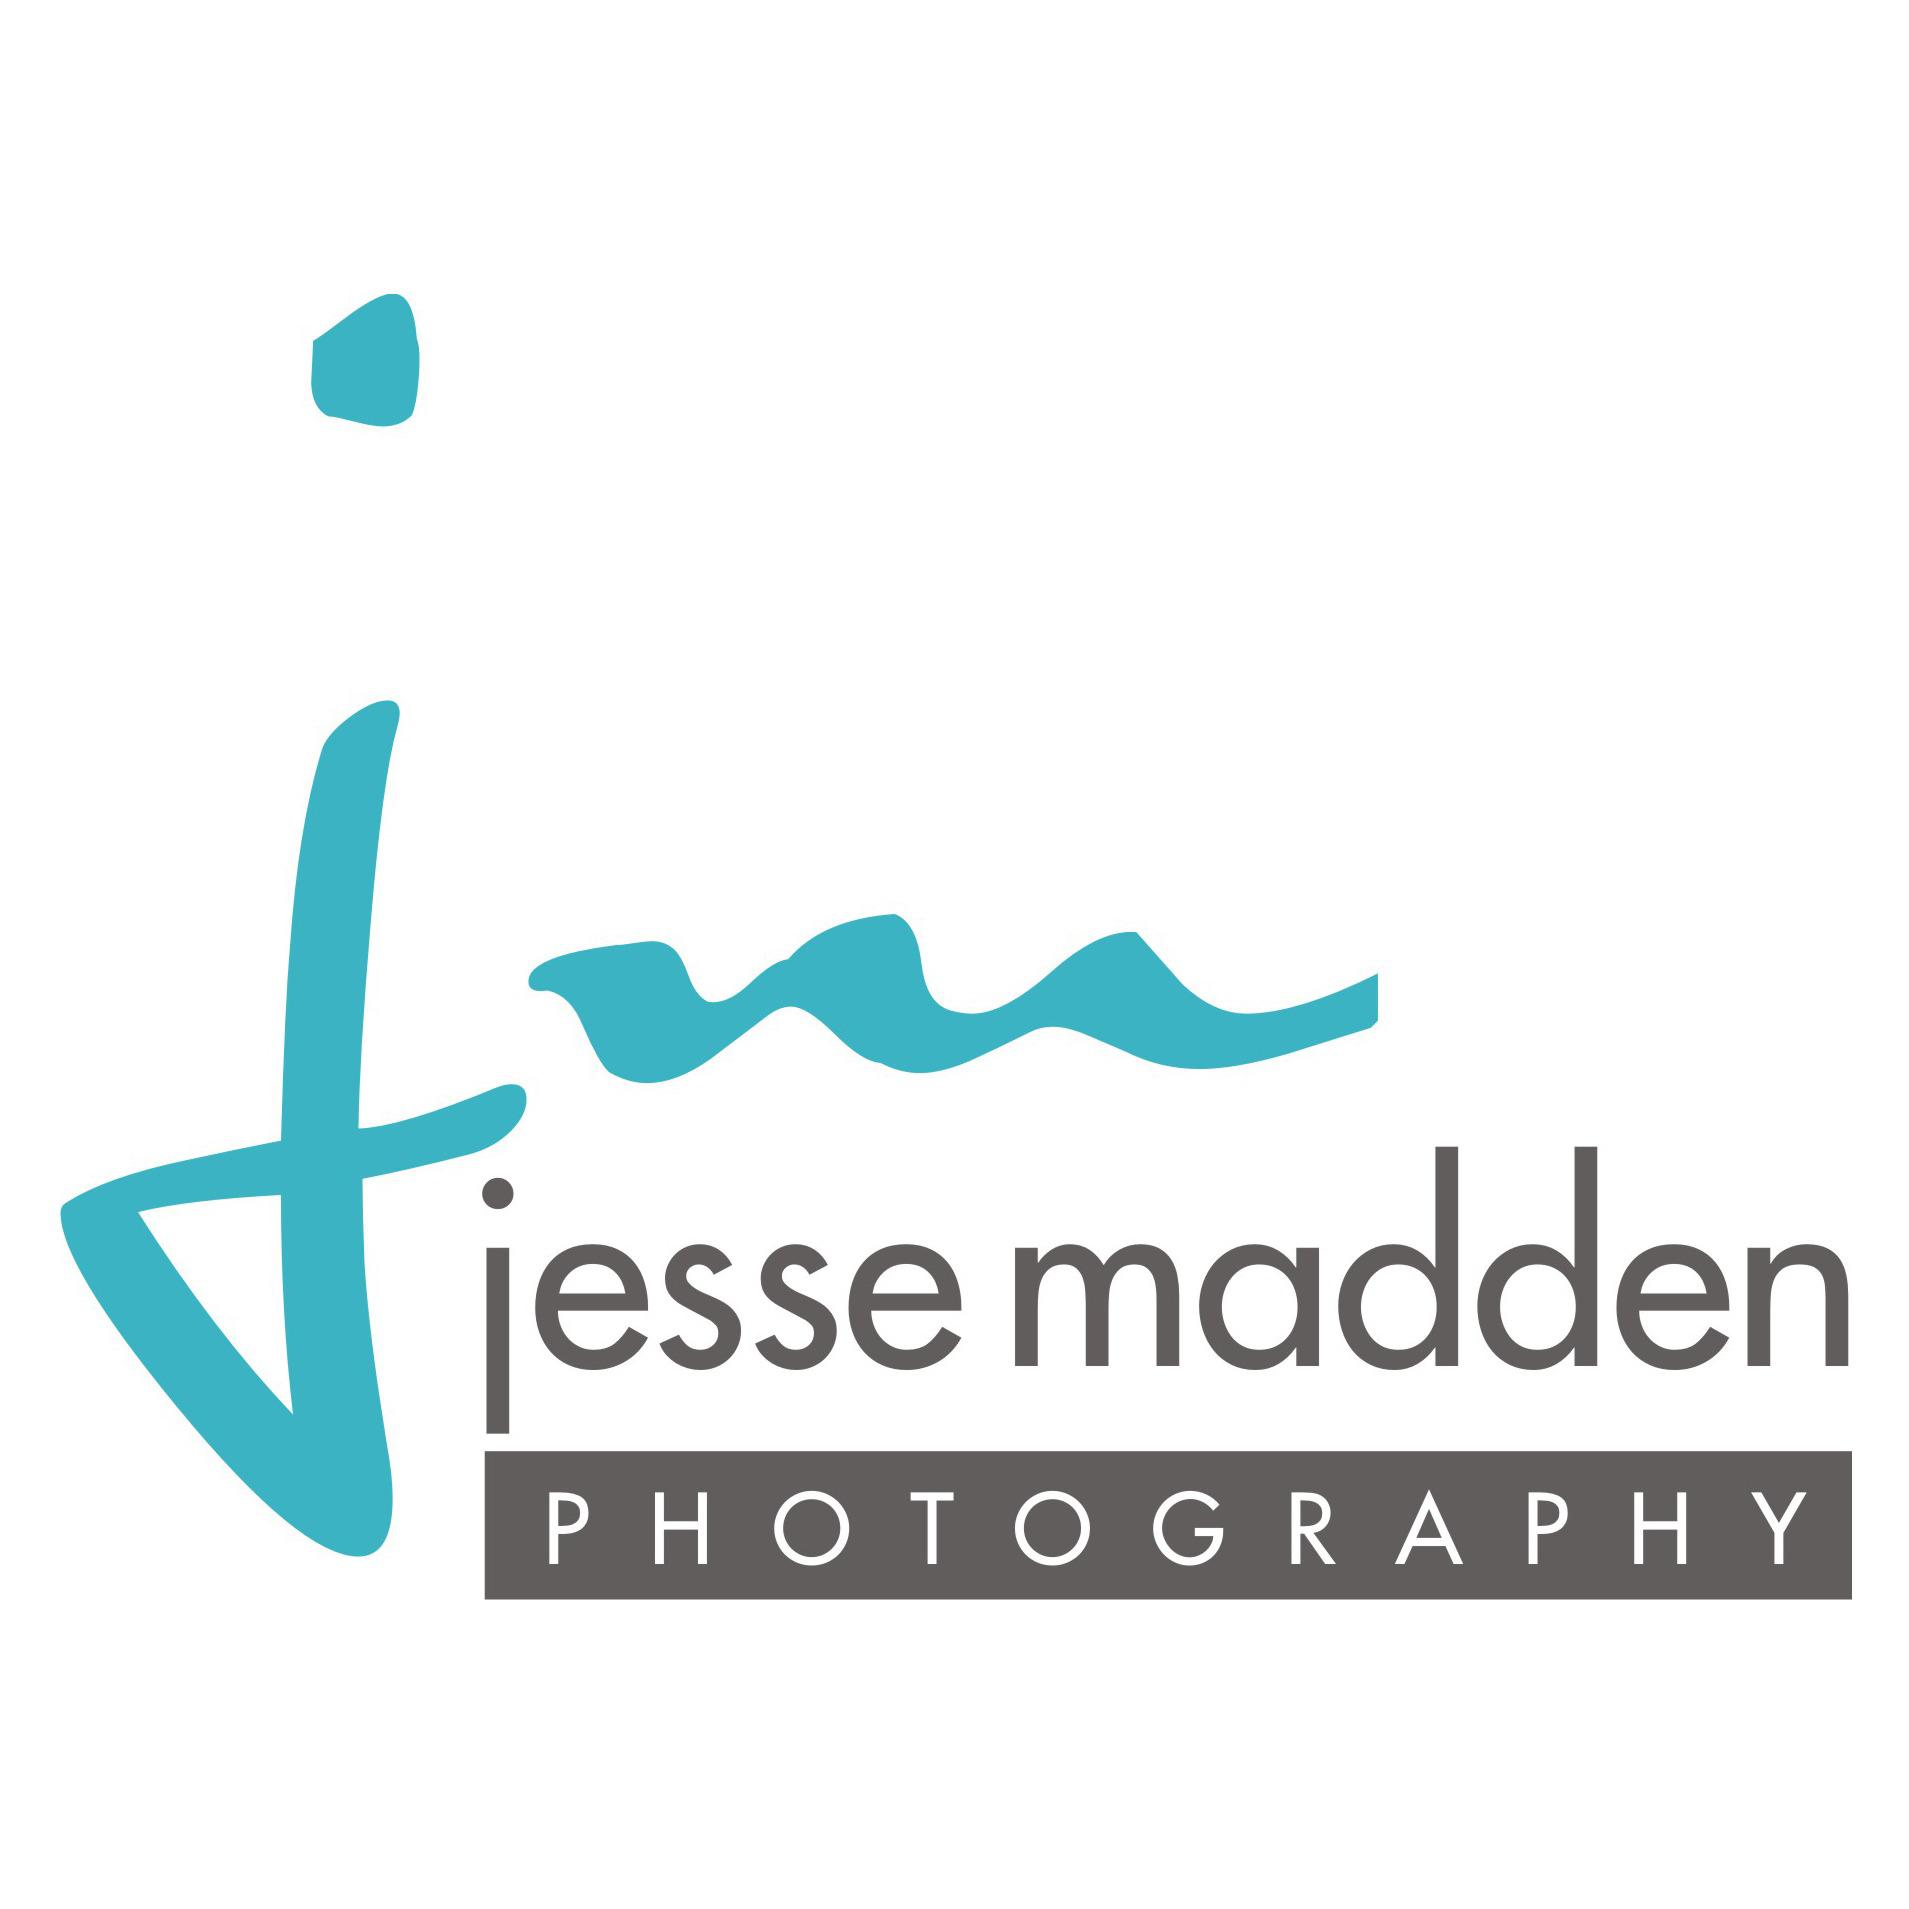 Jesse Madden Photography Logo